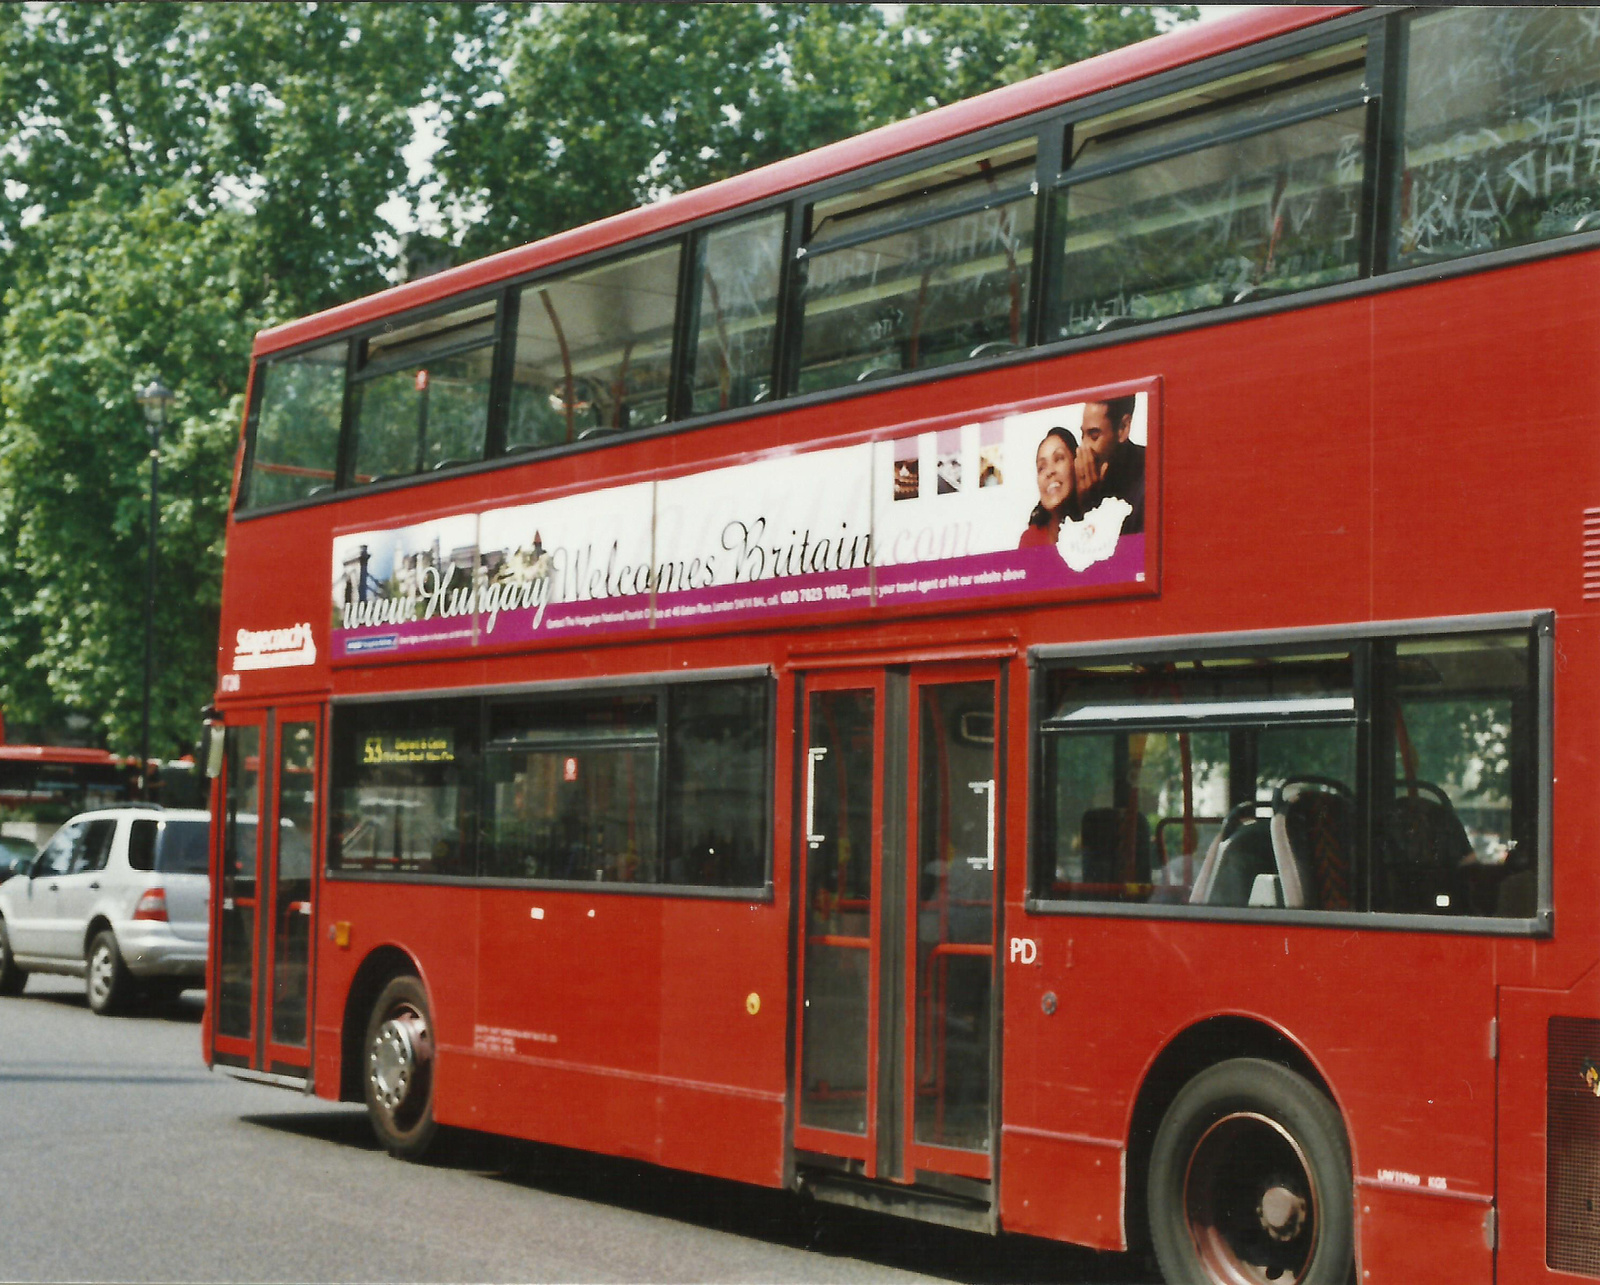 Hungary welcomes Britain 2003 London